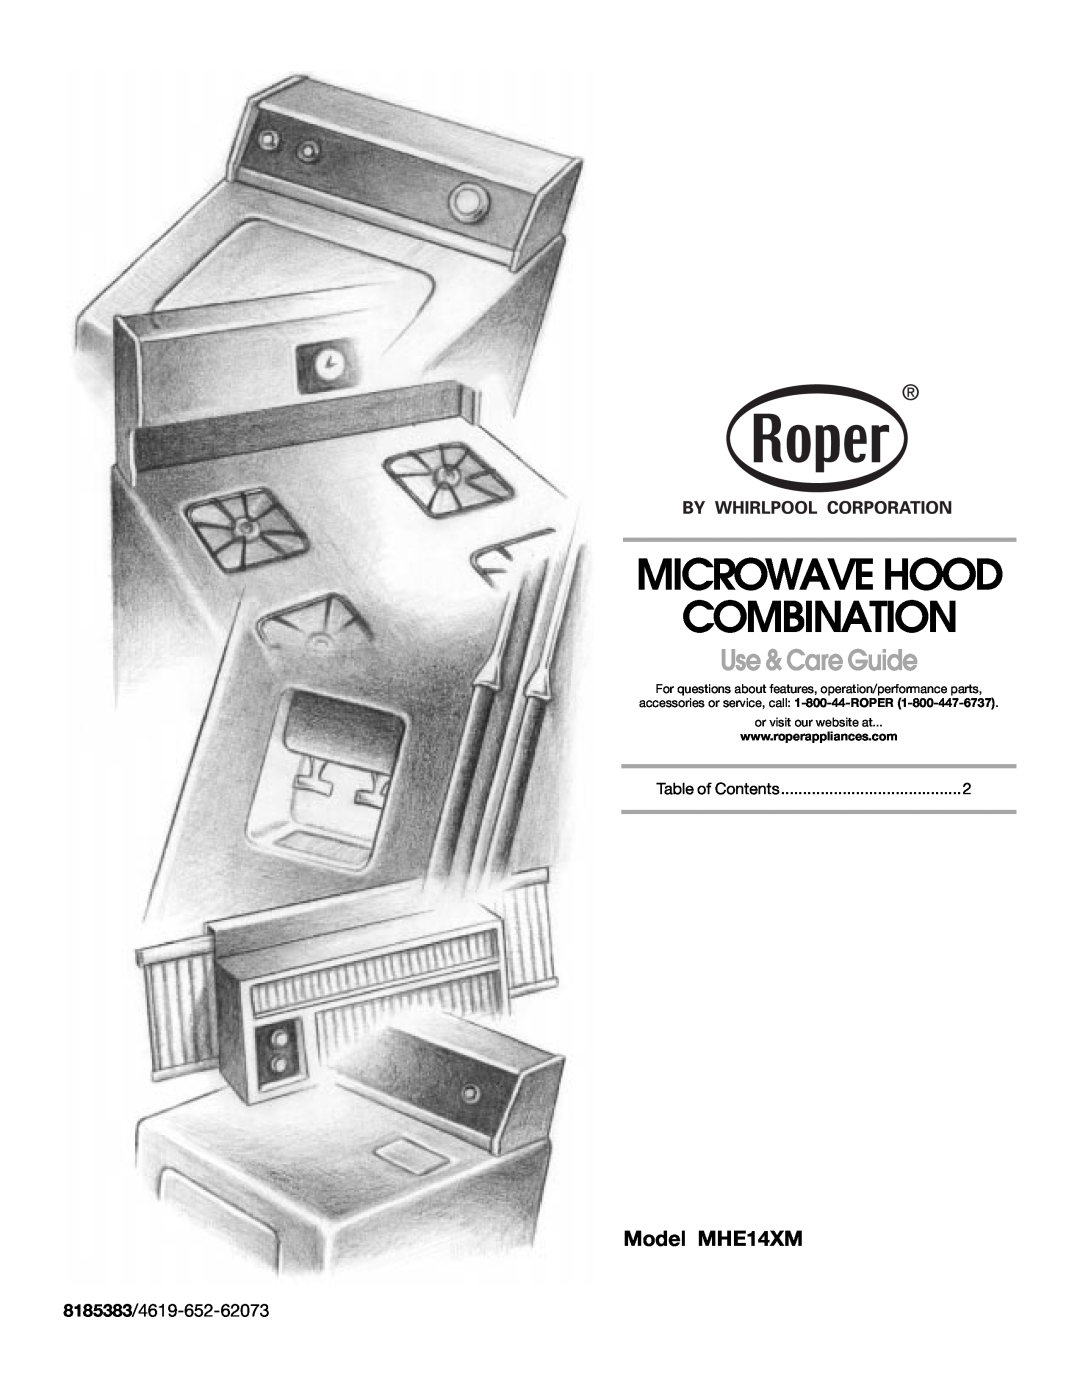 Whirlpool manual Microwave Hood Combination, Use & Care Guide, 8185383/4619-652-62073, Model MHE14XM 